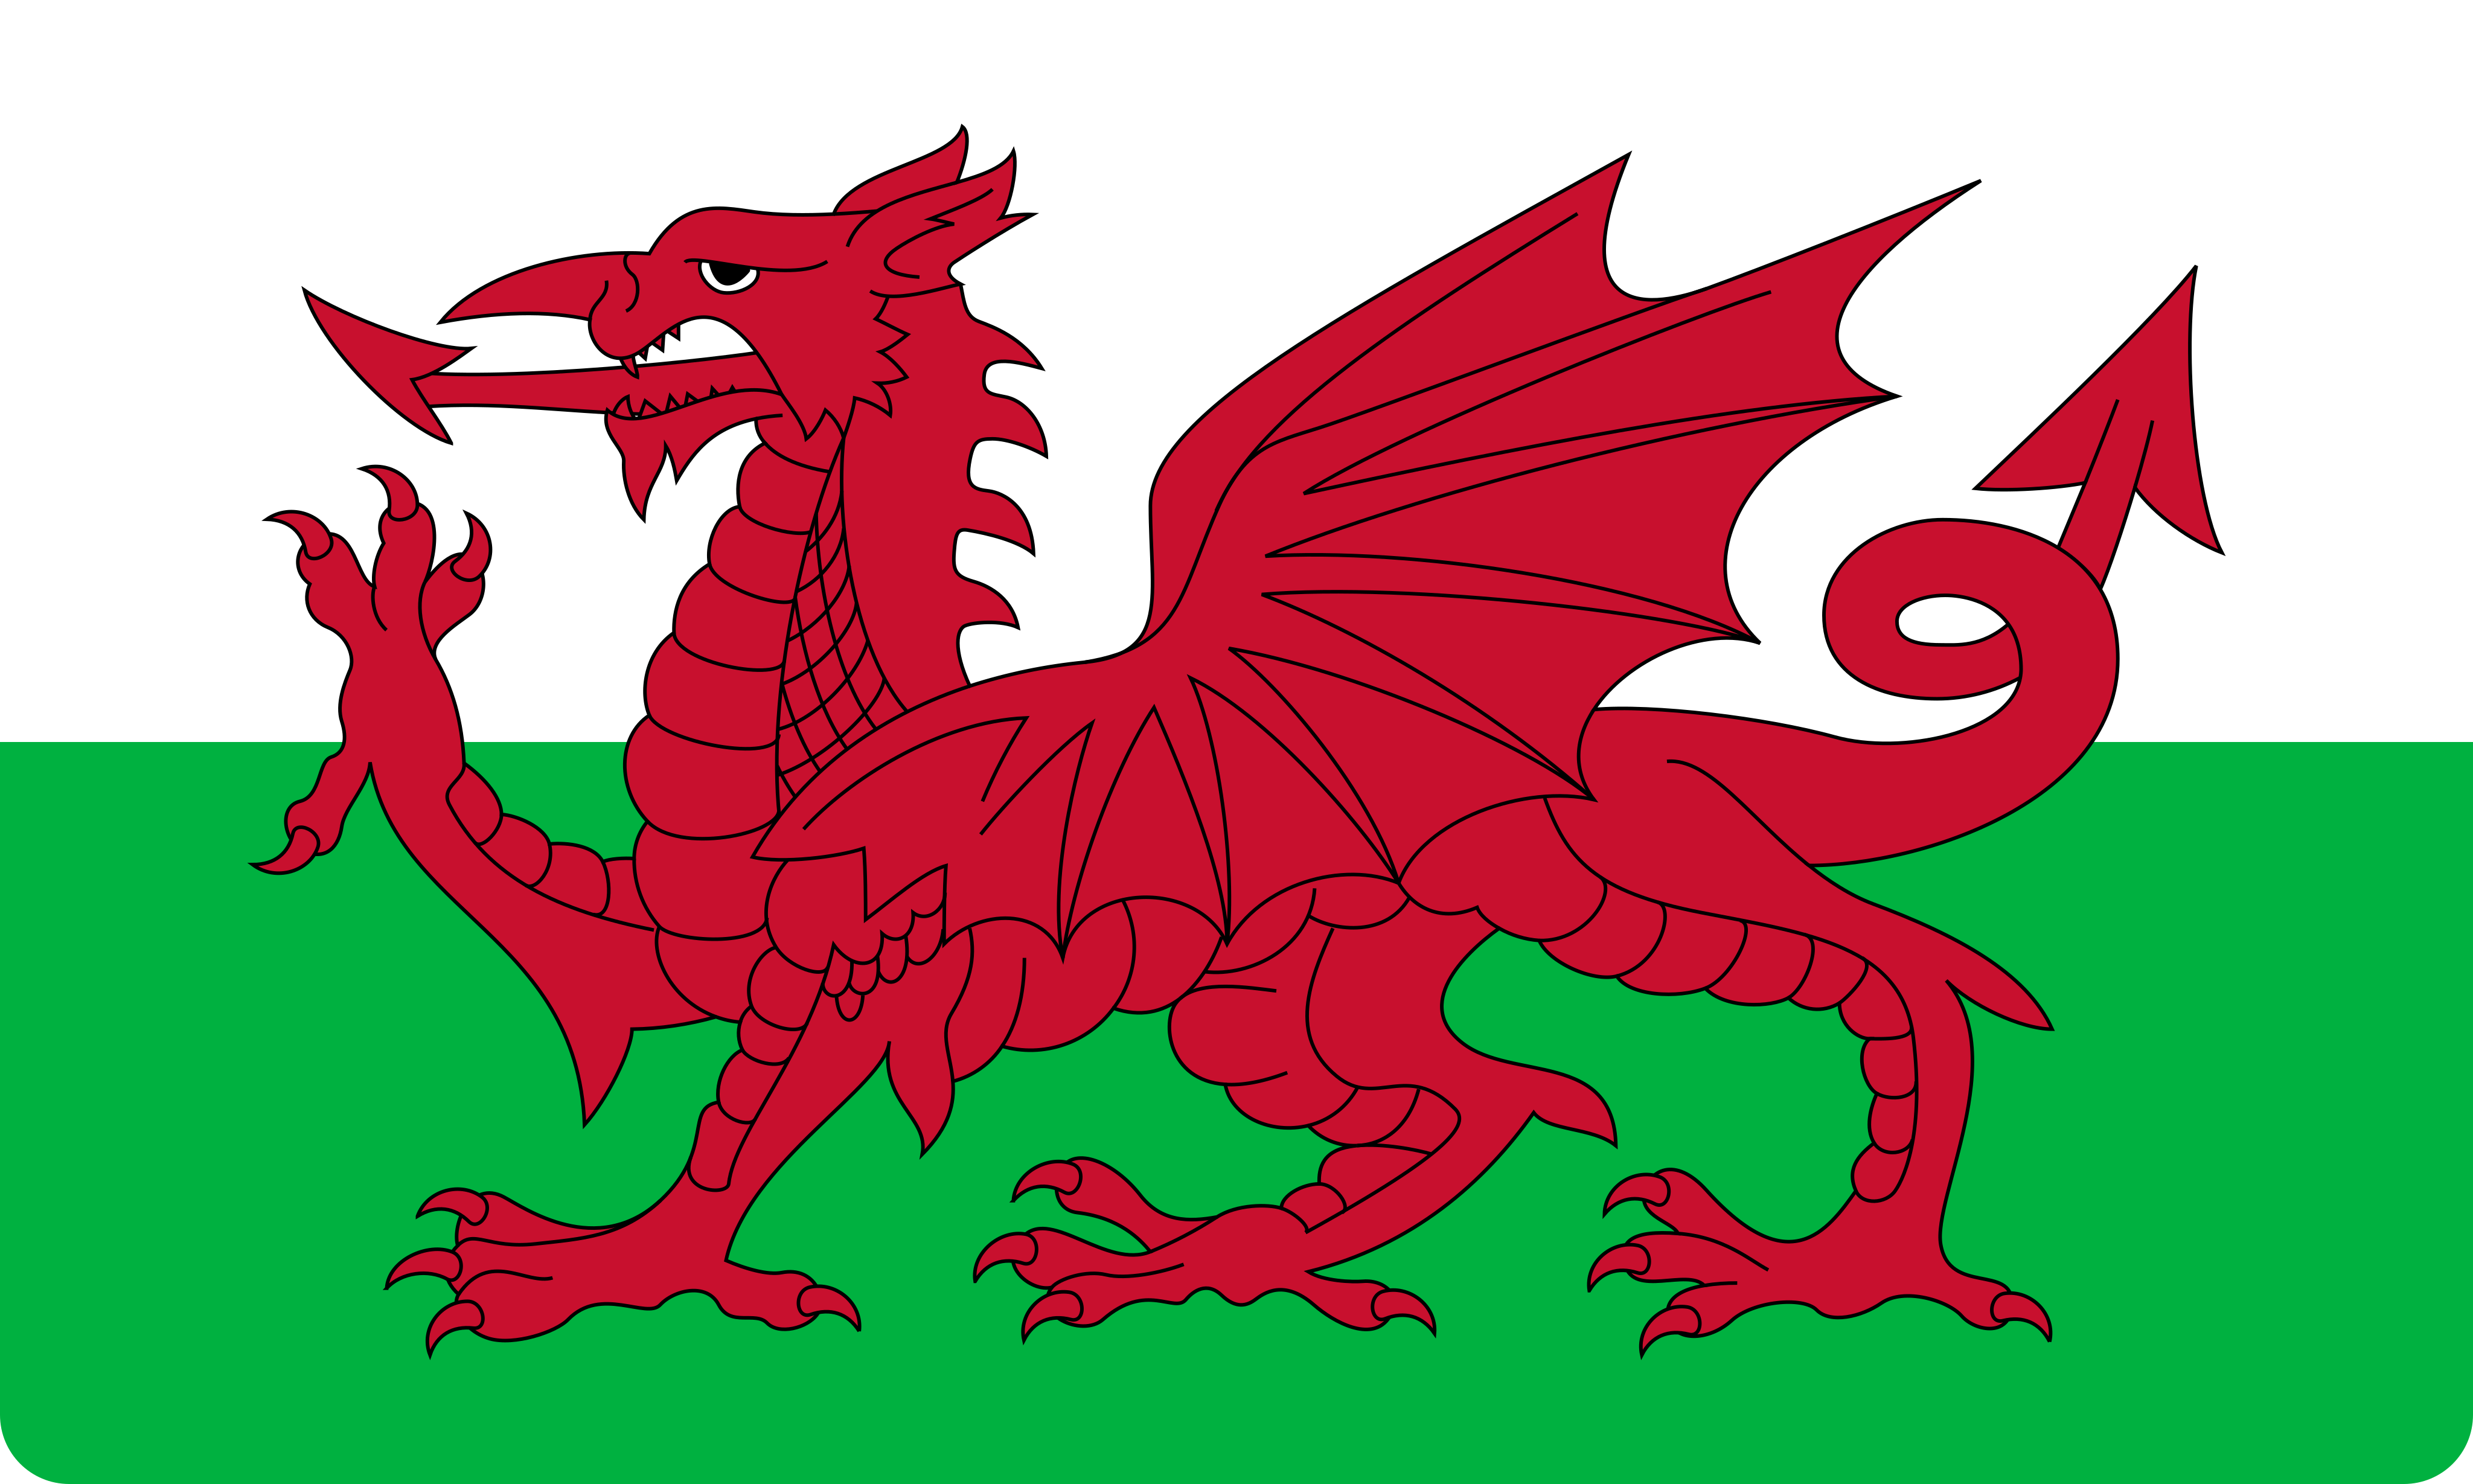 bandeira wales flag - Flag of Wales